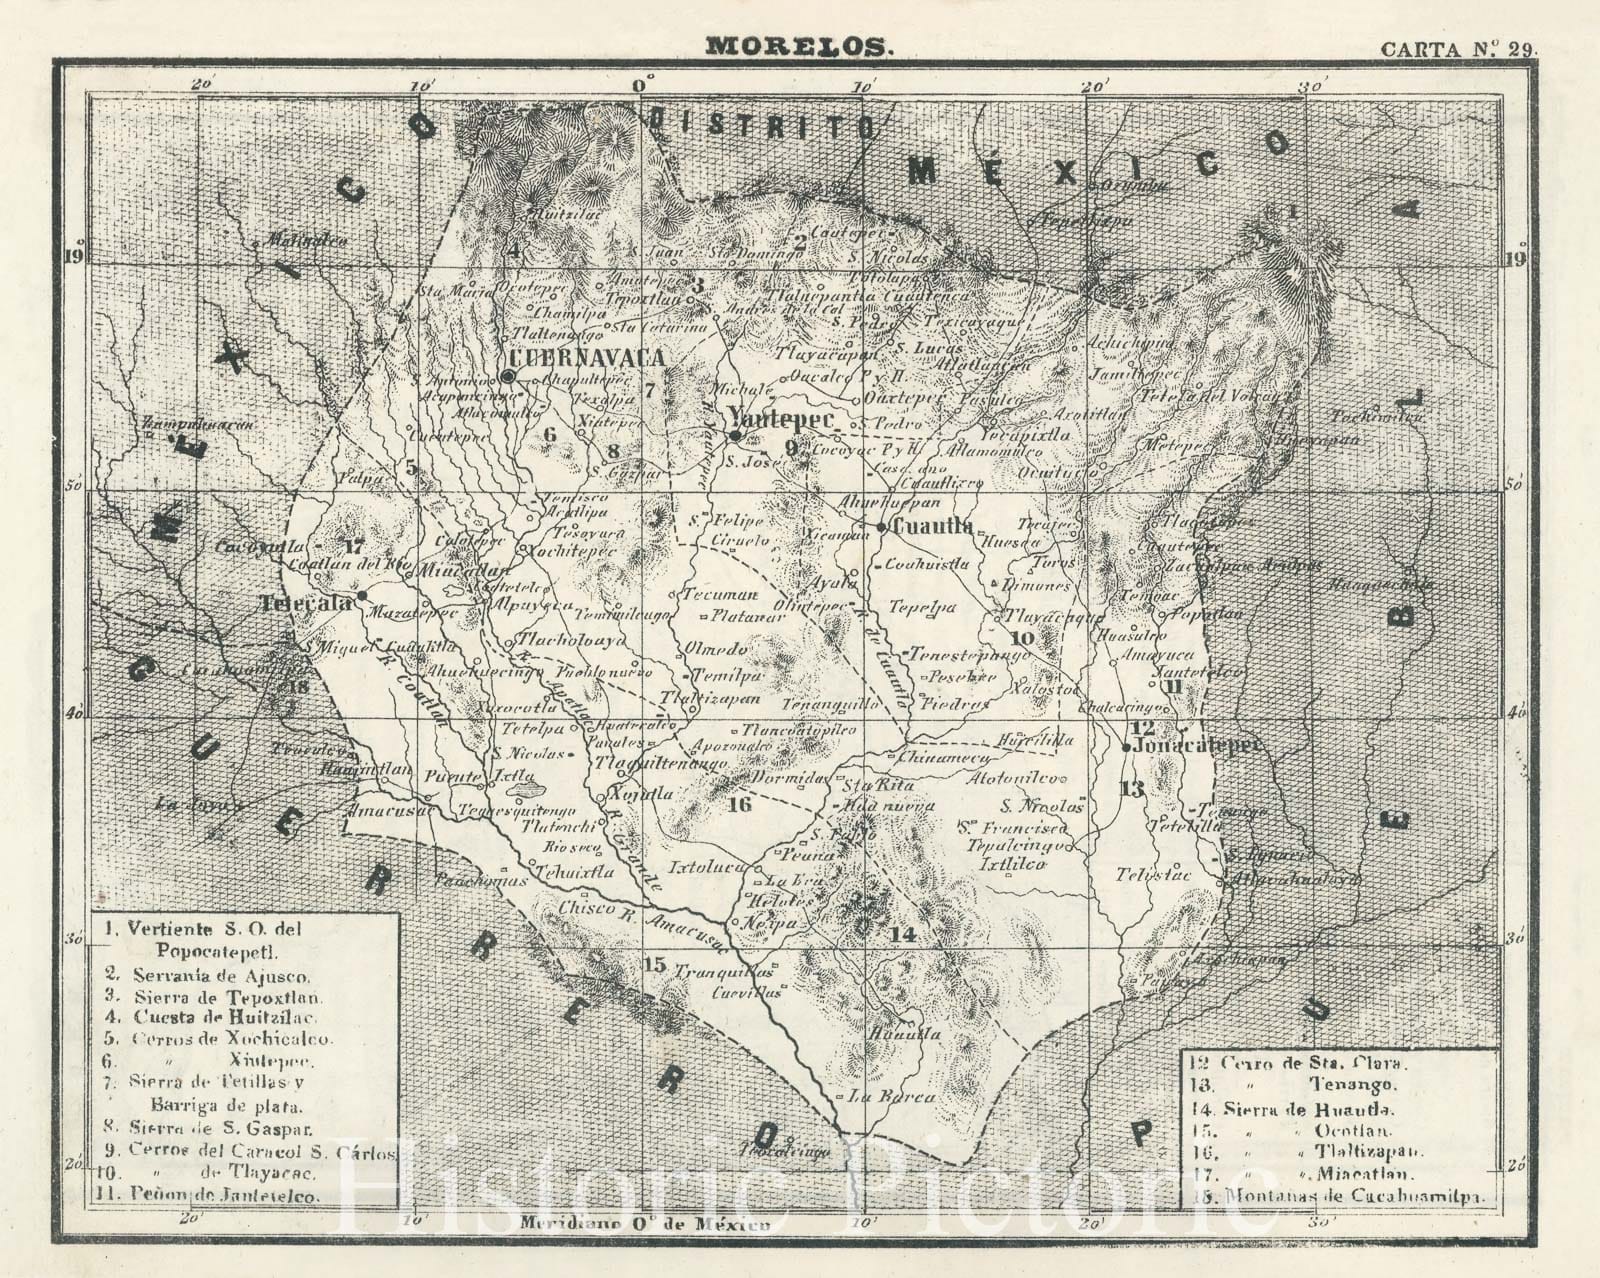 Historic Map : Text and Map: XXV. Morelos. Carta No. 29., 1874, Vintage Wall Decor